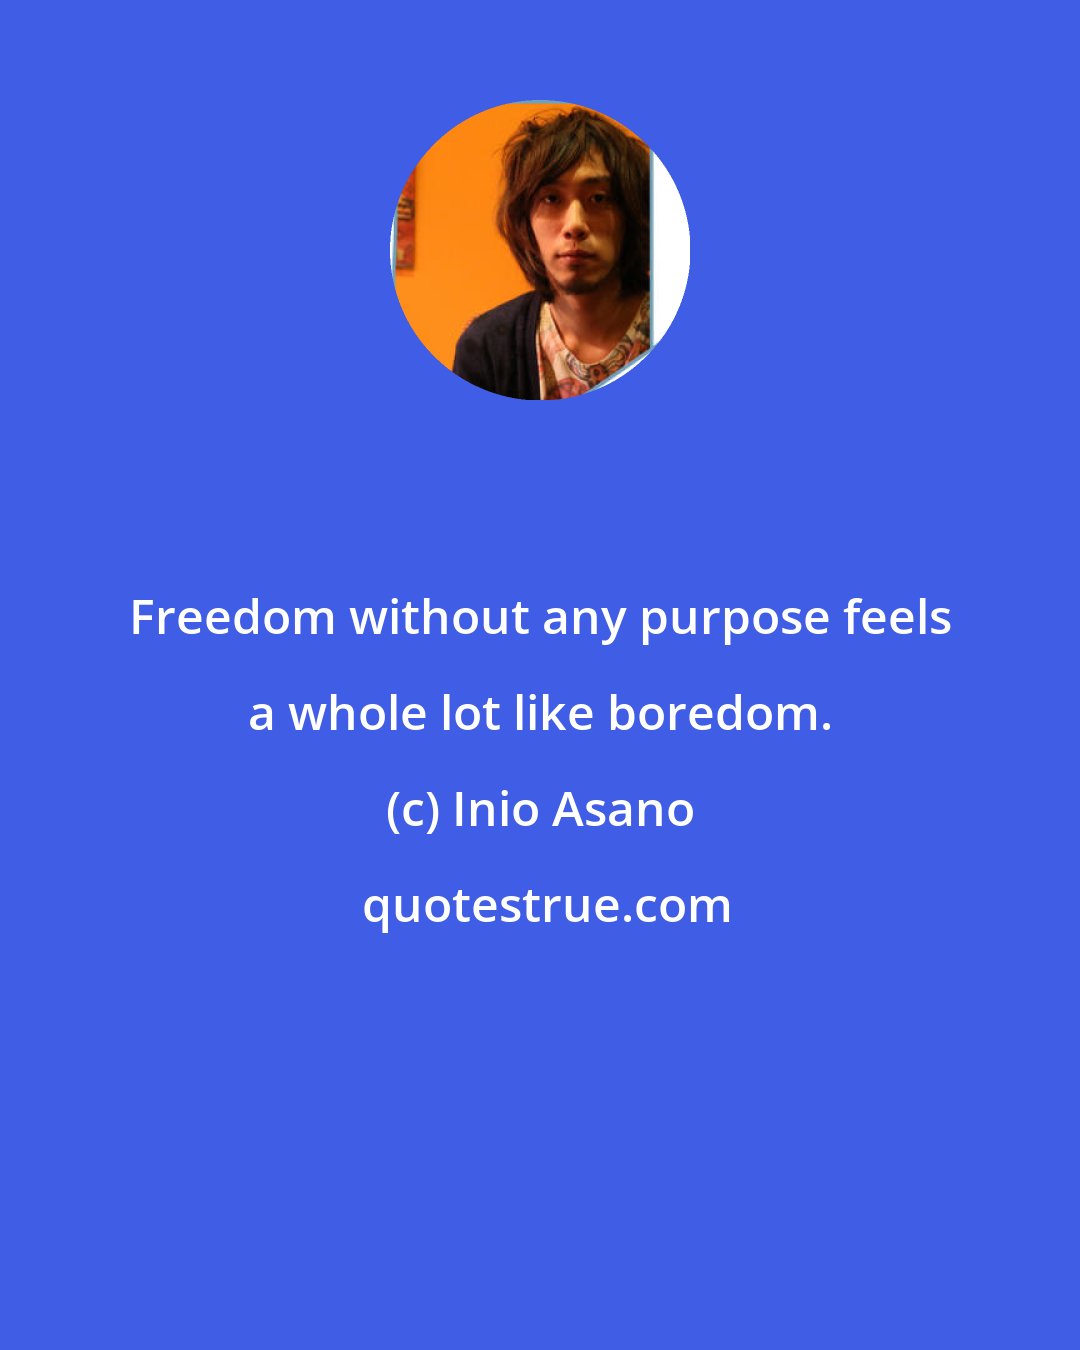 Inio Asano: Freedom without any purpose feels a whole lot like boredom.